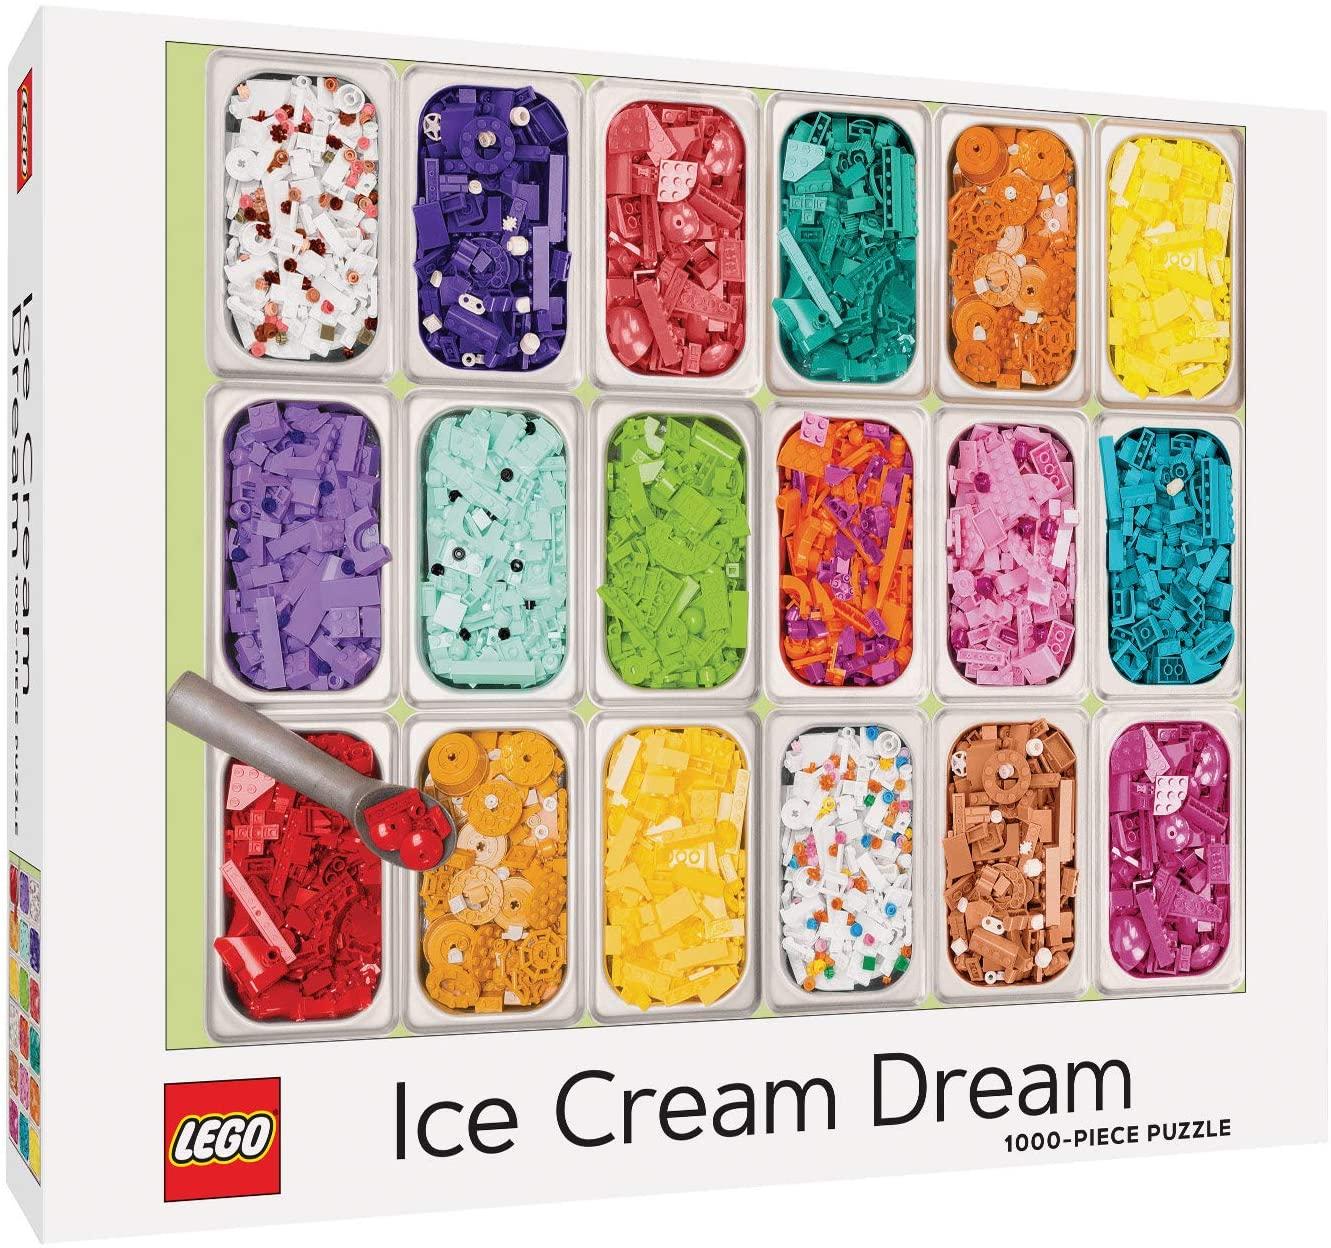 1000-Piece Lego Ice Cream Dreams Jigsaw Puzzle for $9.99